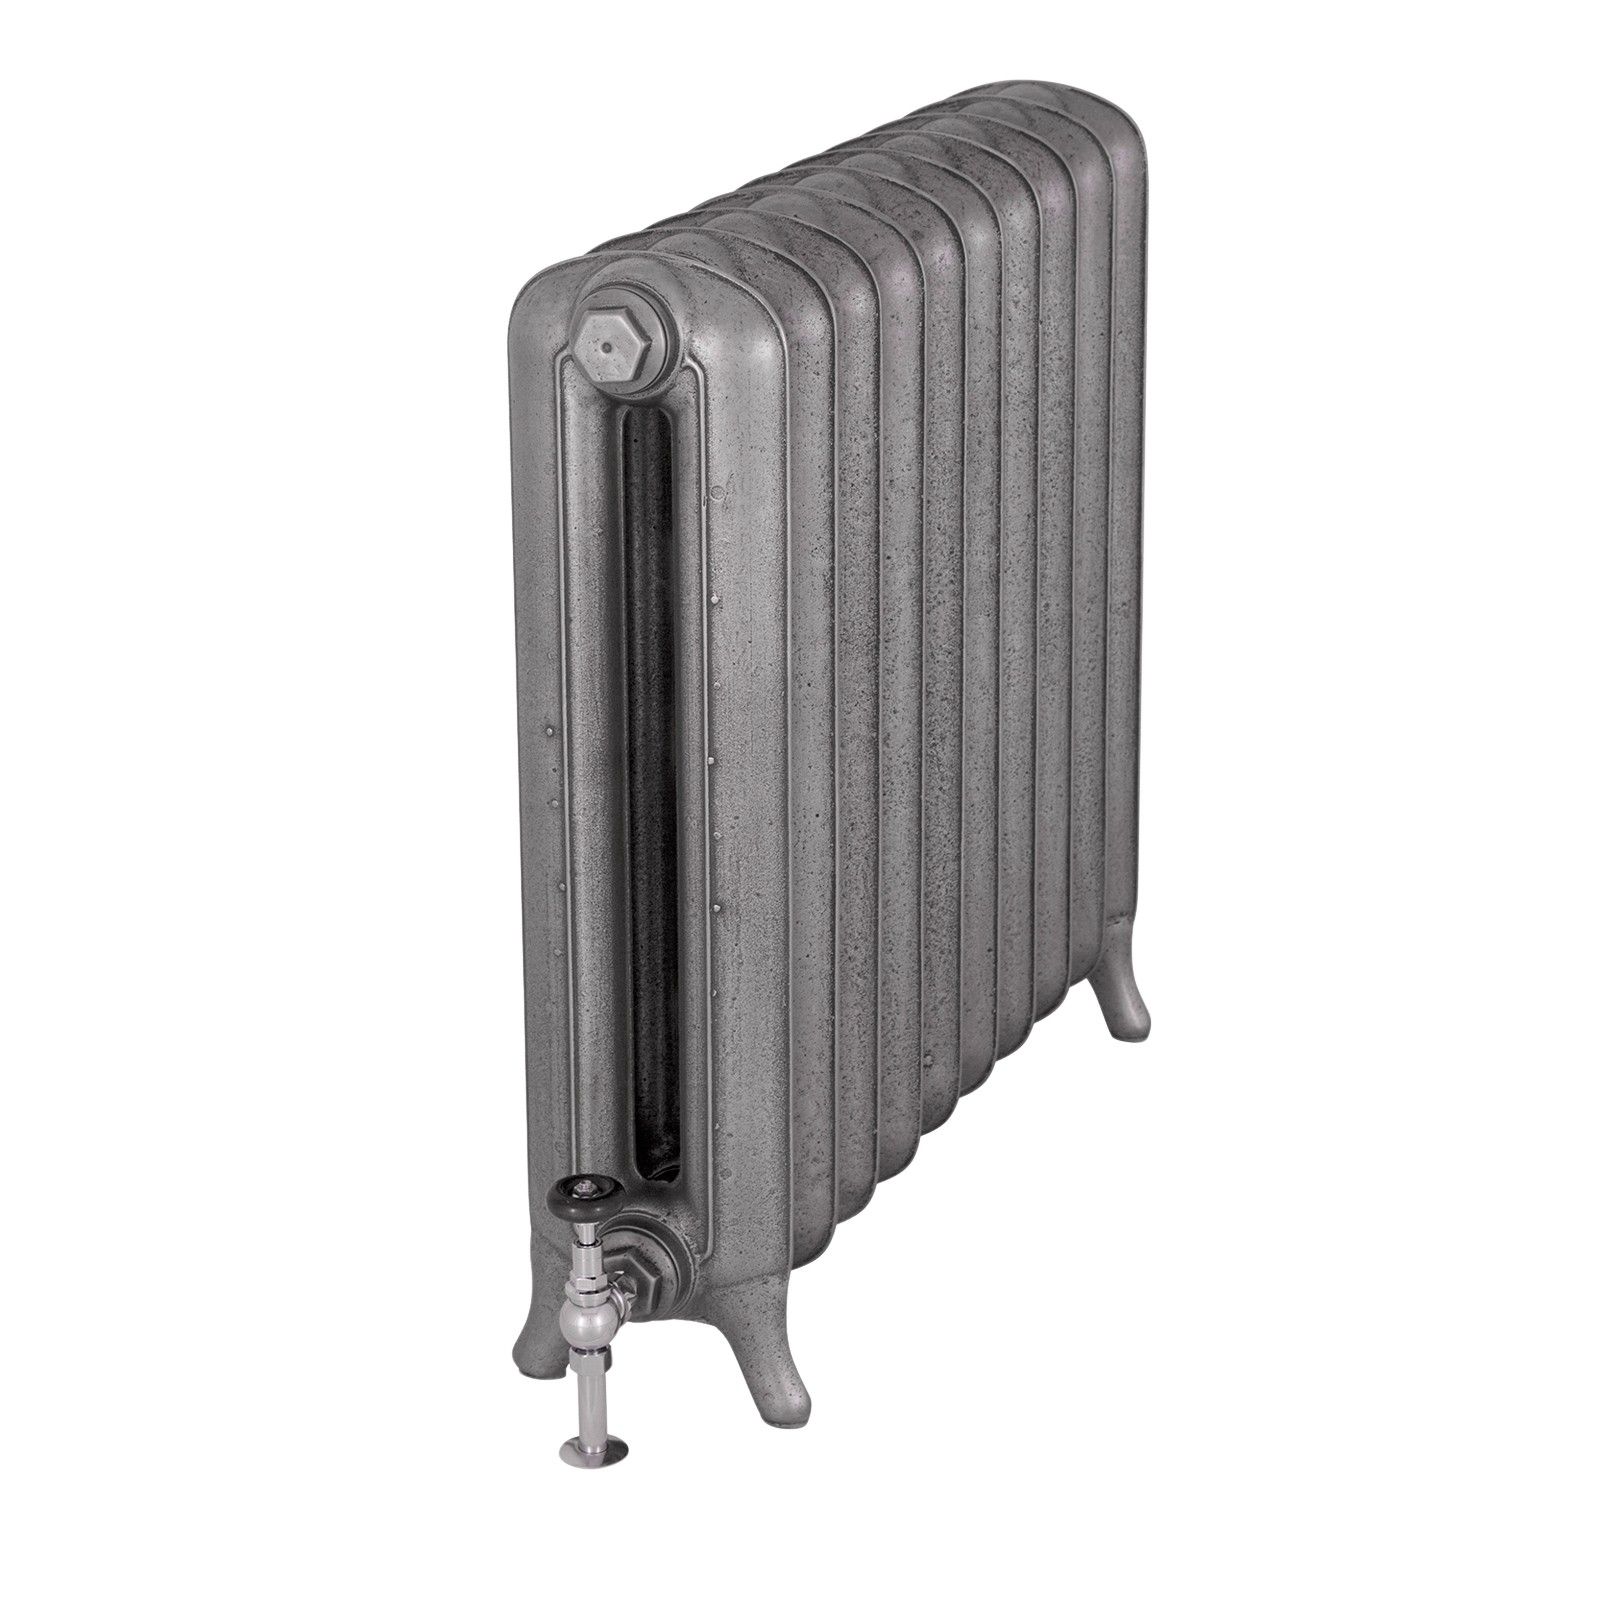 Peer radiator 2 columns 550mm high